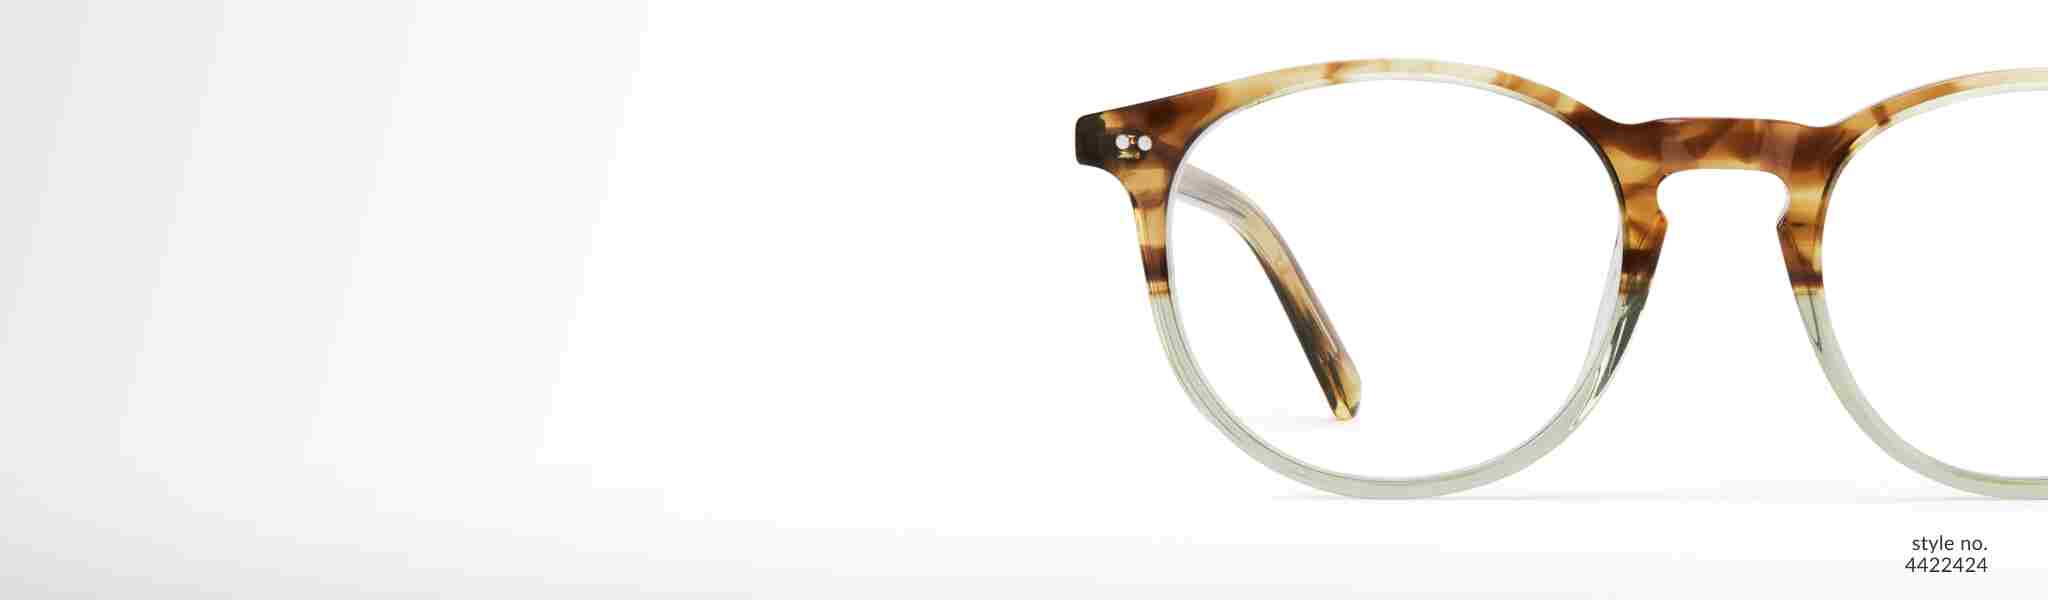 Image of Zenni two-tone round glasses #4422424.